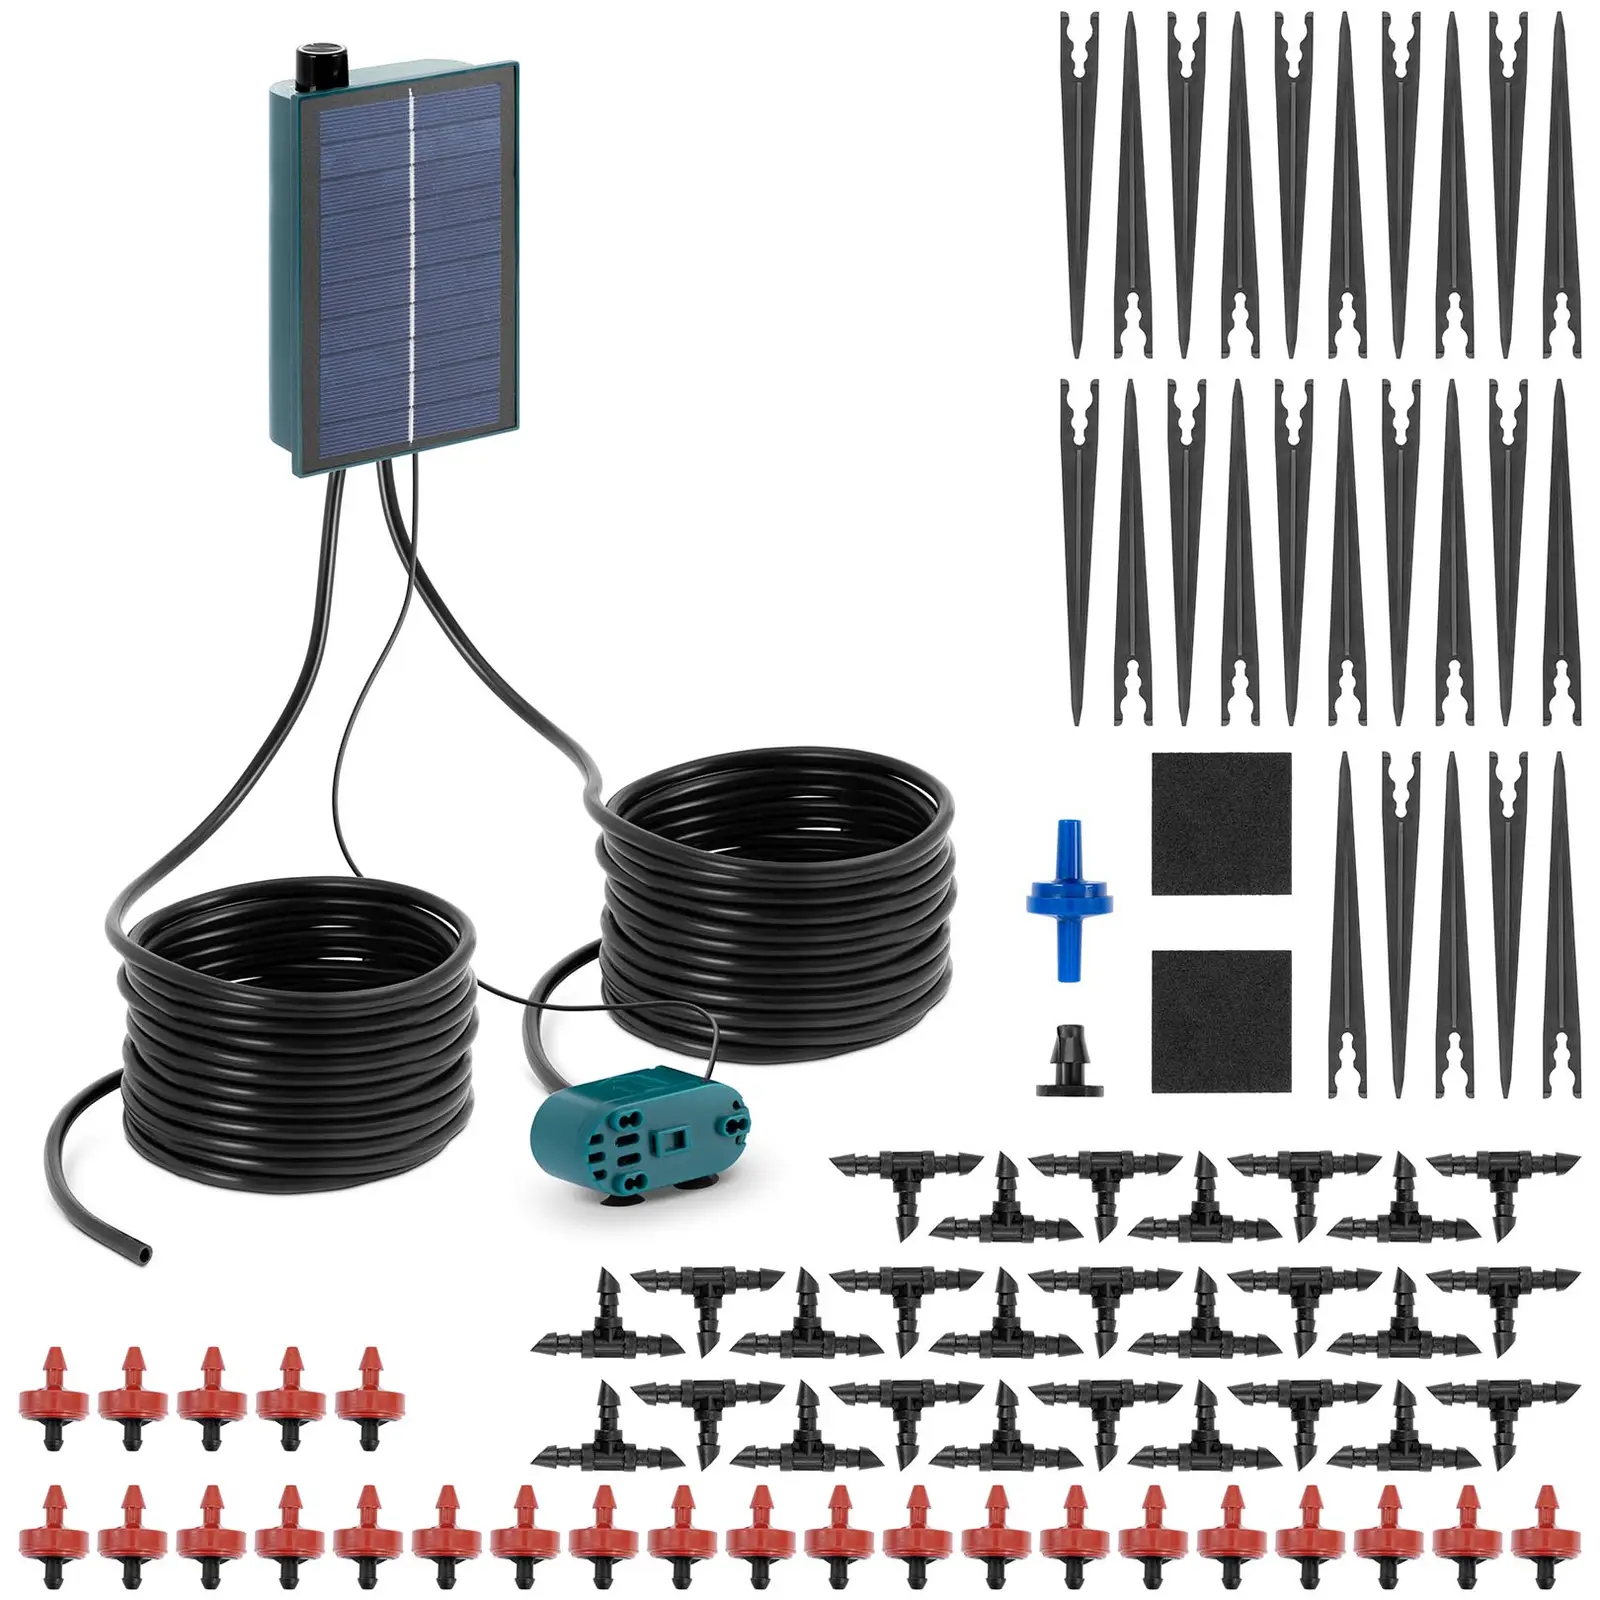 Solar irrigation system - 25 Dripper - 5 m hose